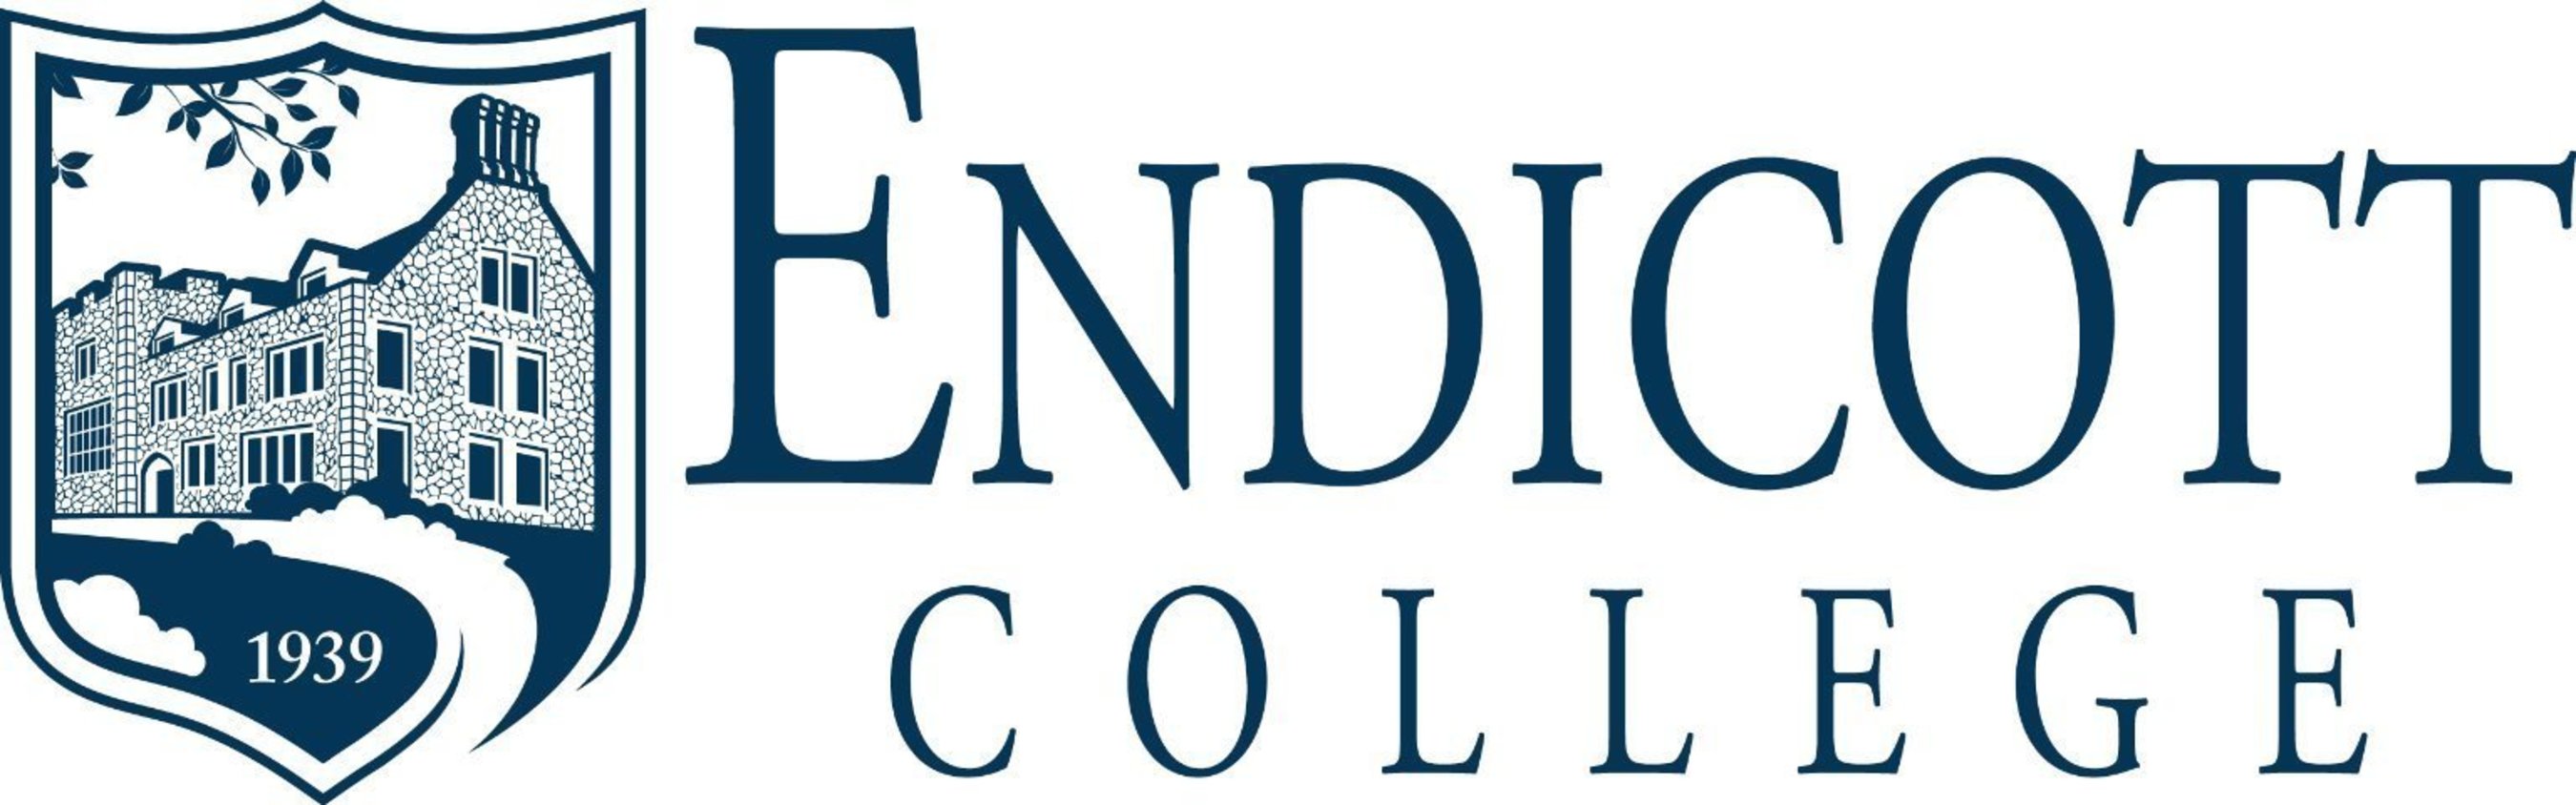 Endicott College logo  (PRNewsFoto/Endicott College)